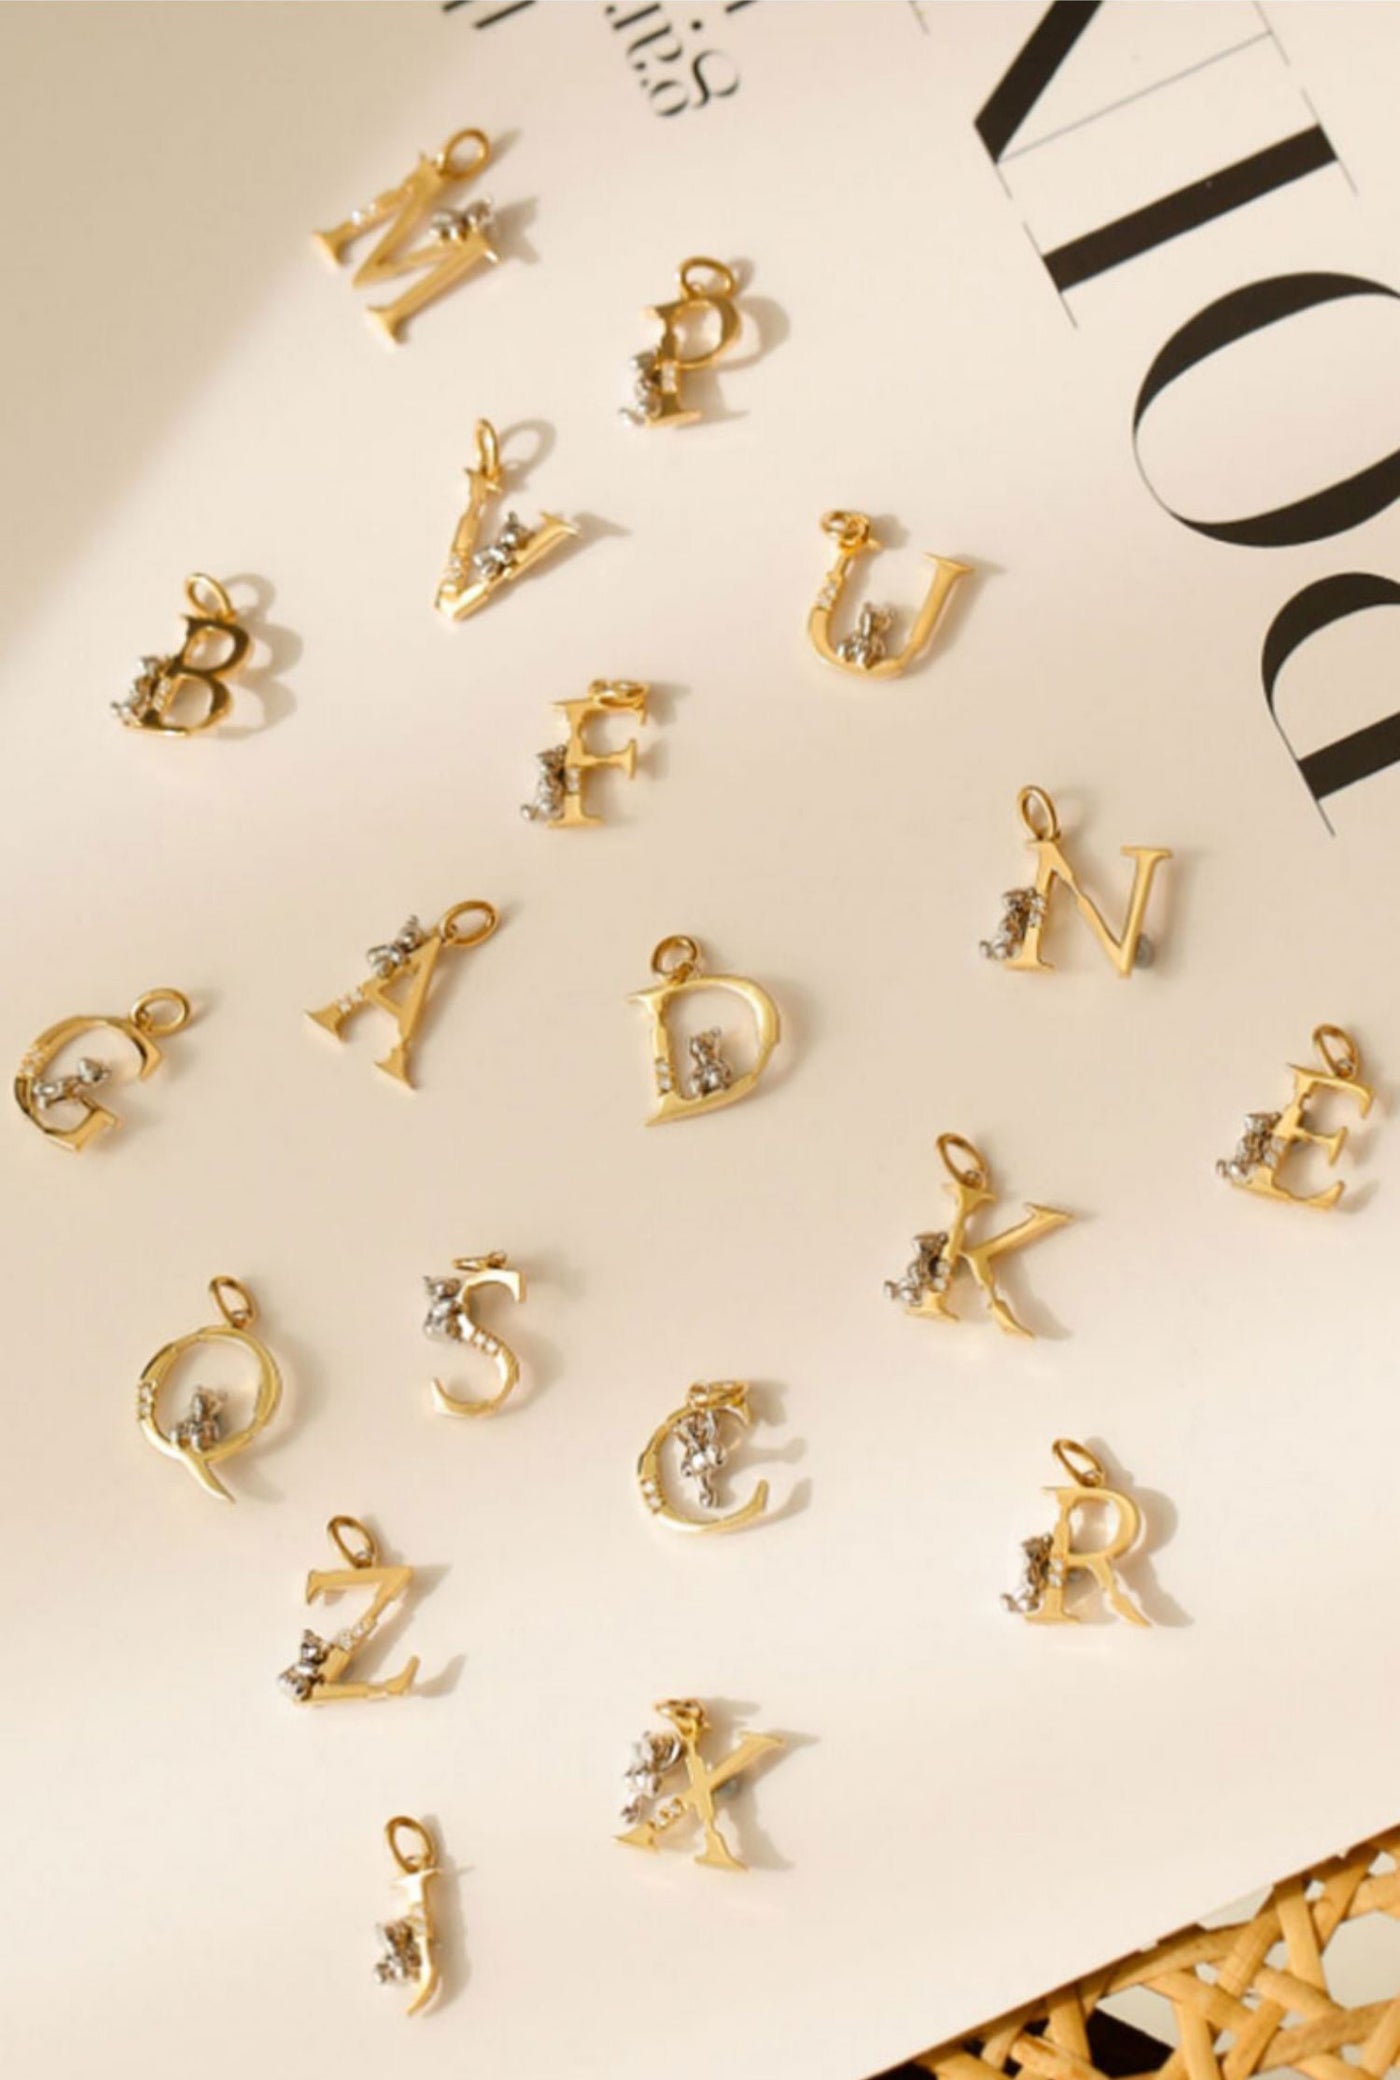 Custom Letter Bear Necklaces - Solid 18K Gold